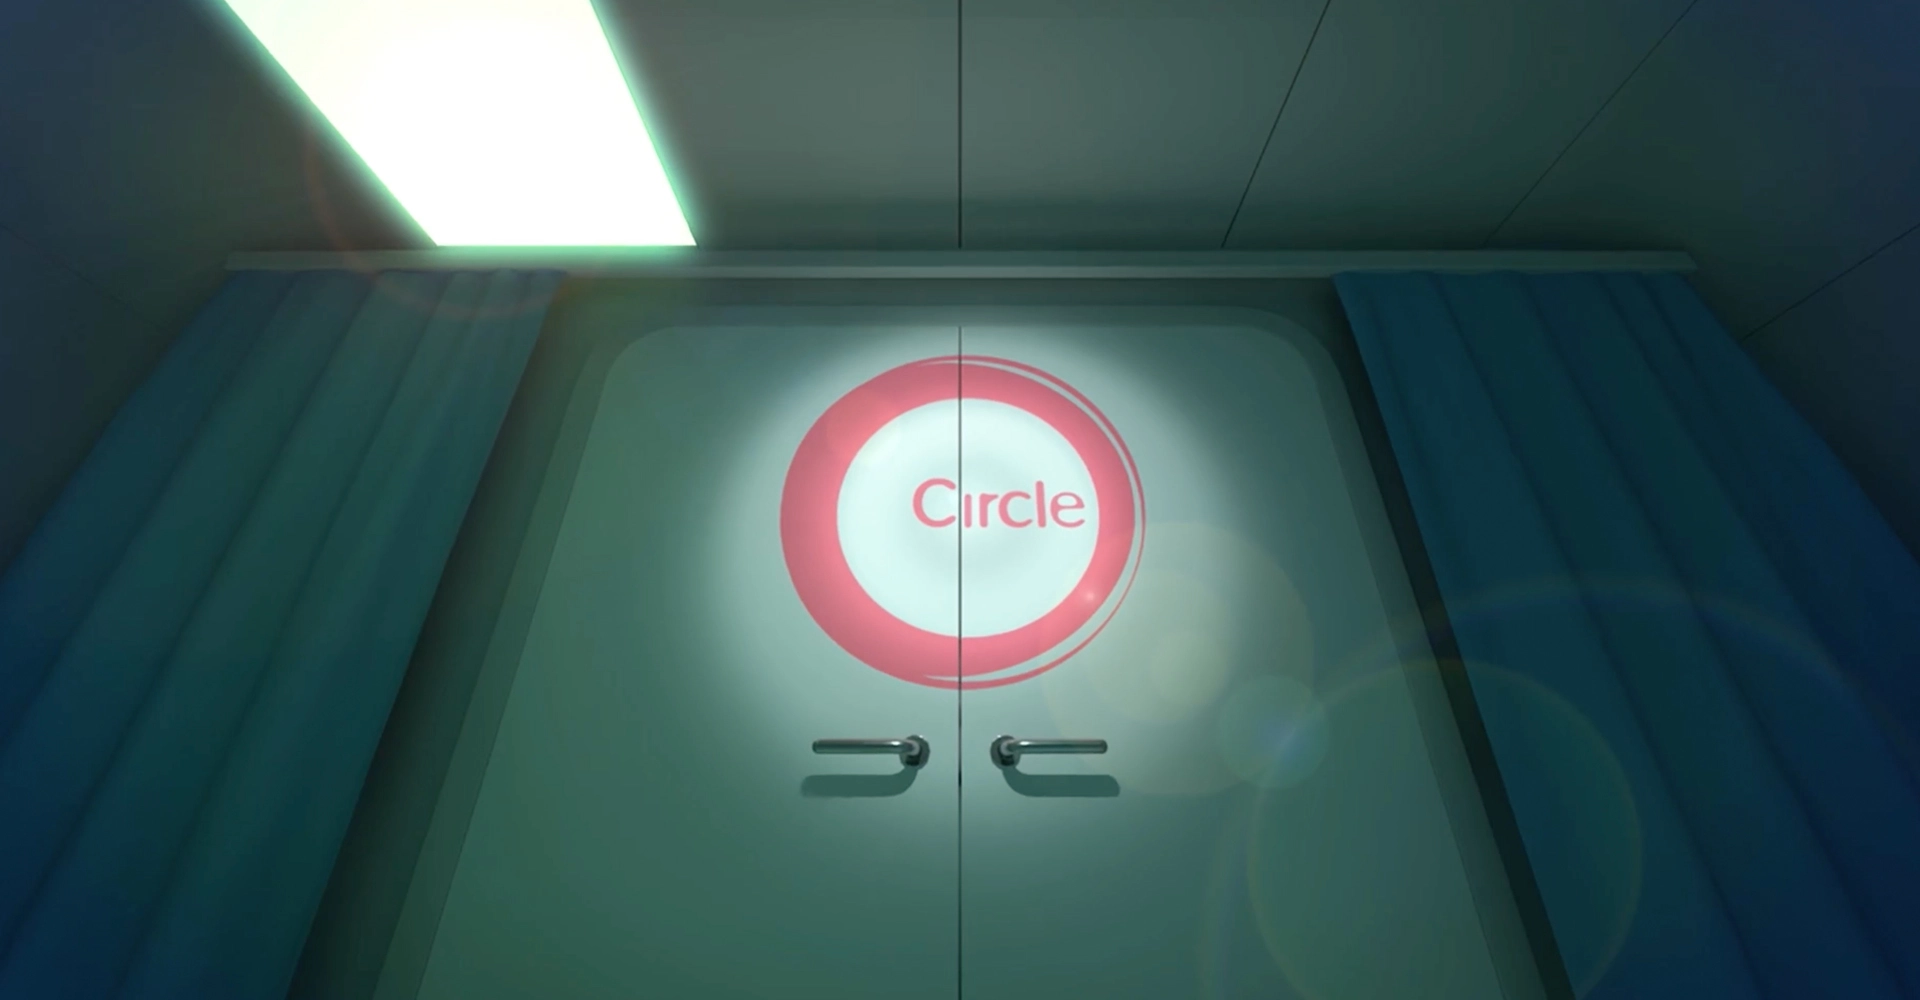 Circle logo overlays hospital theatre doors